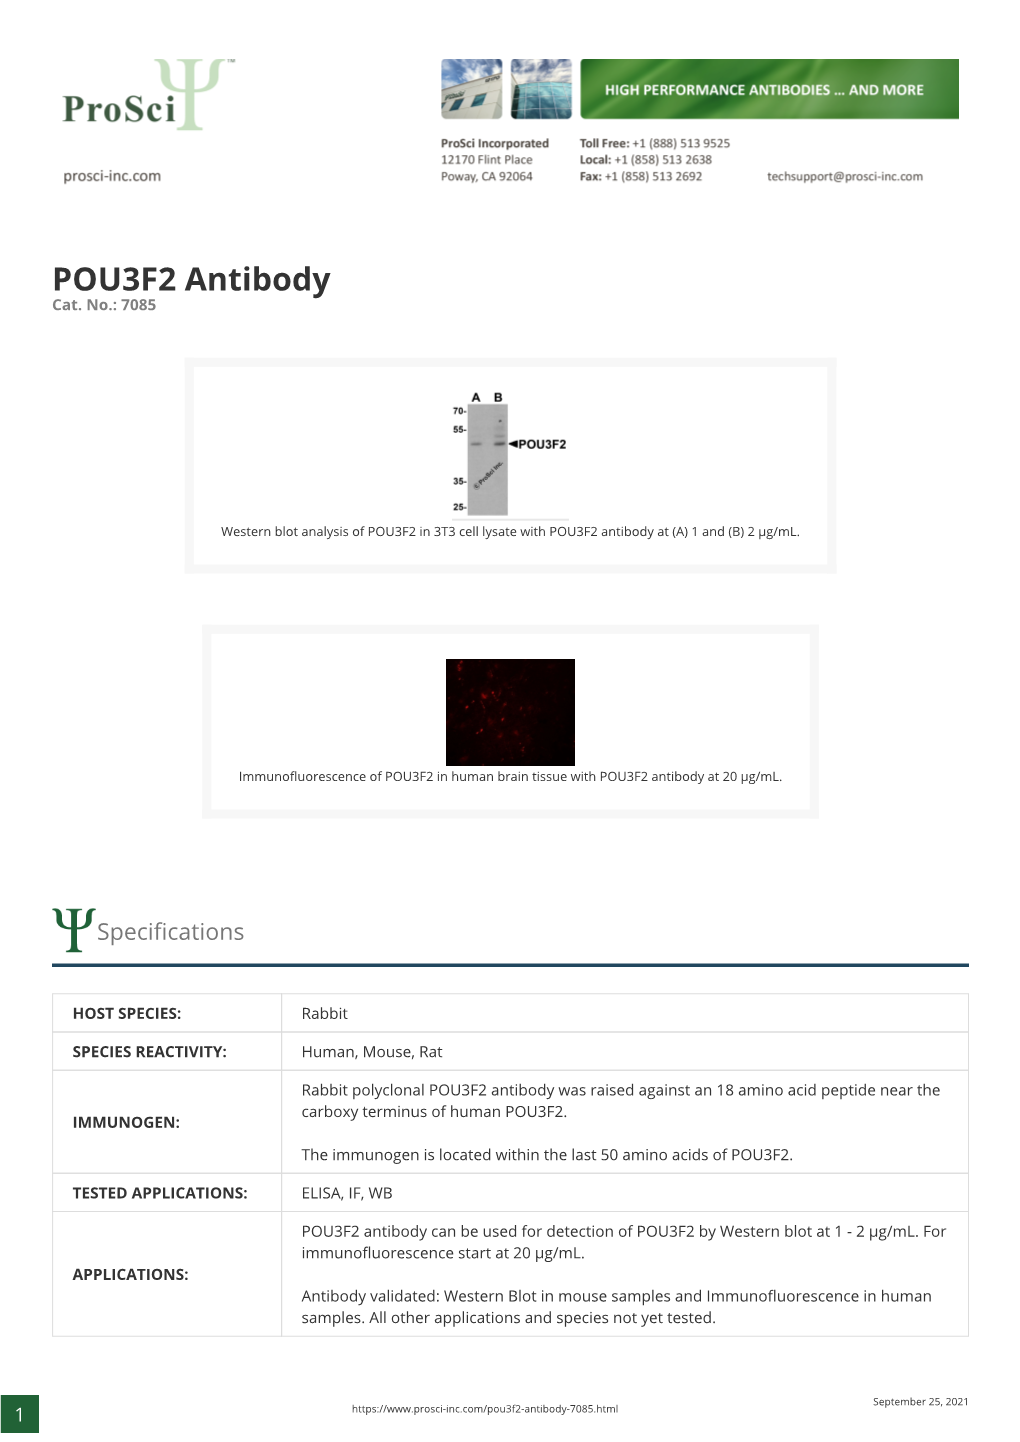 POU3F2 Antibody Cat